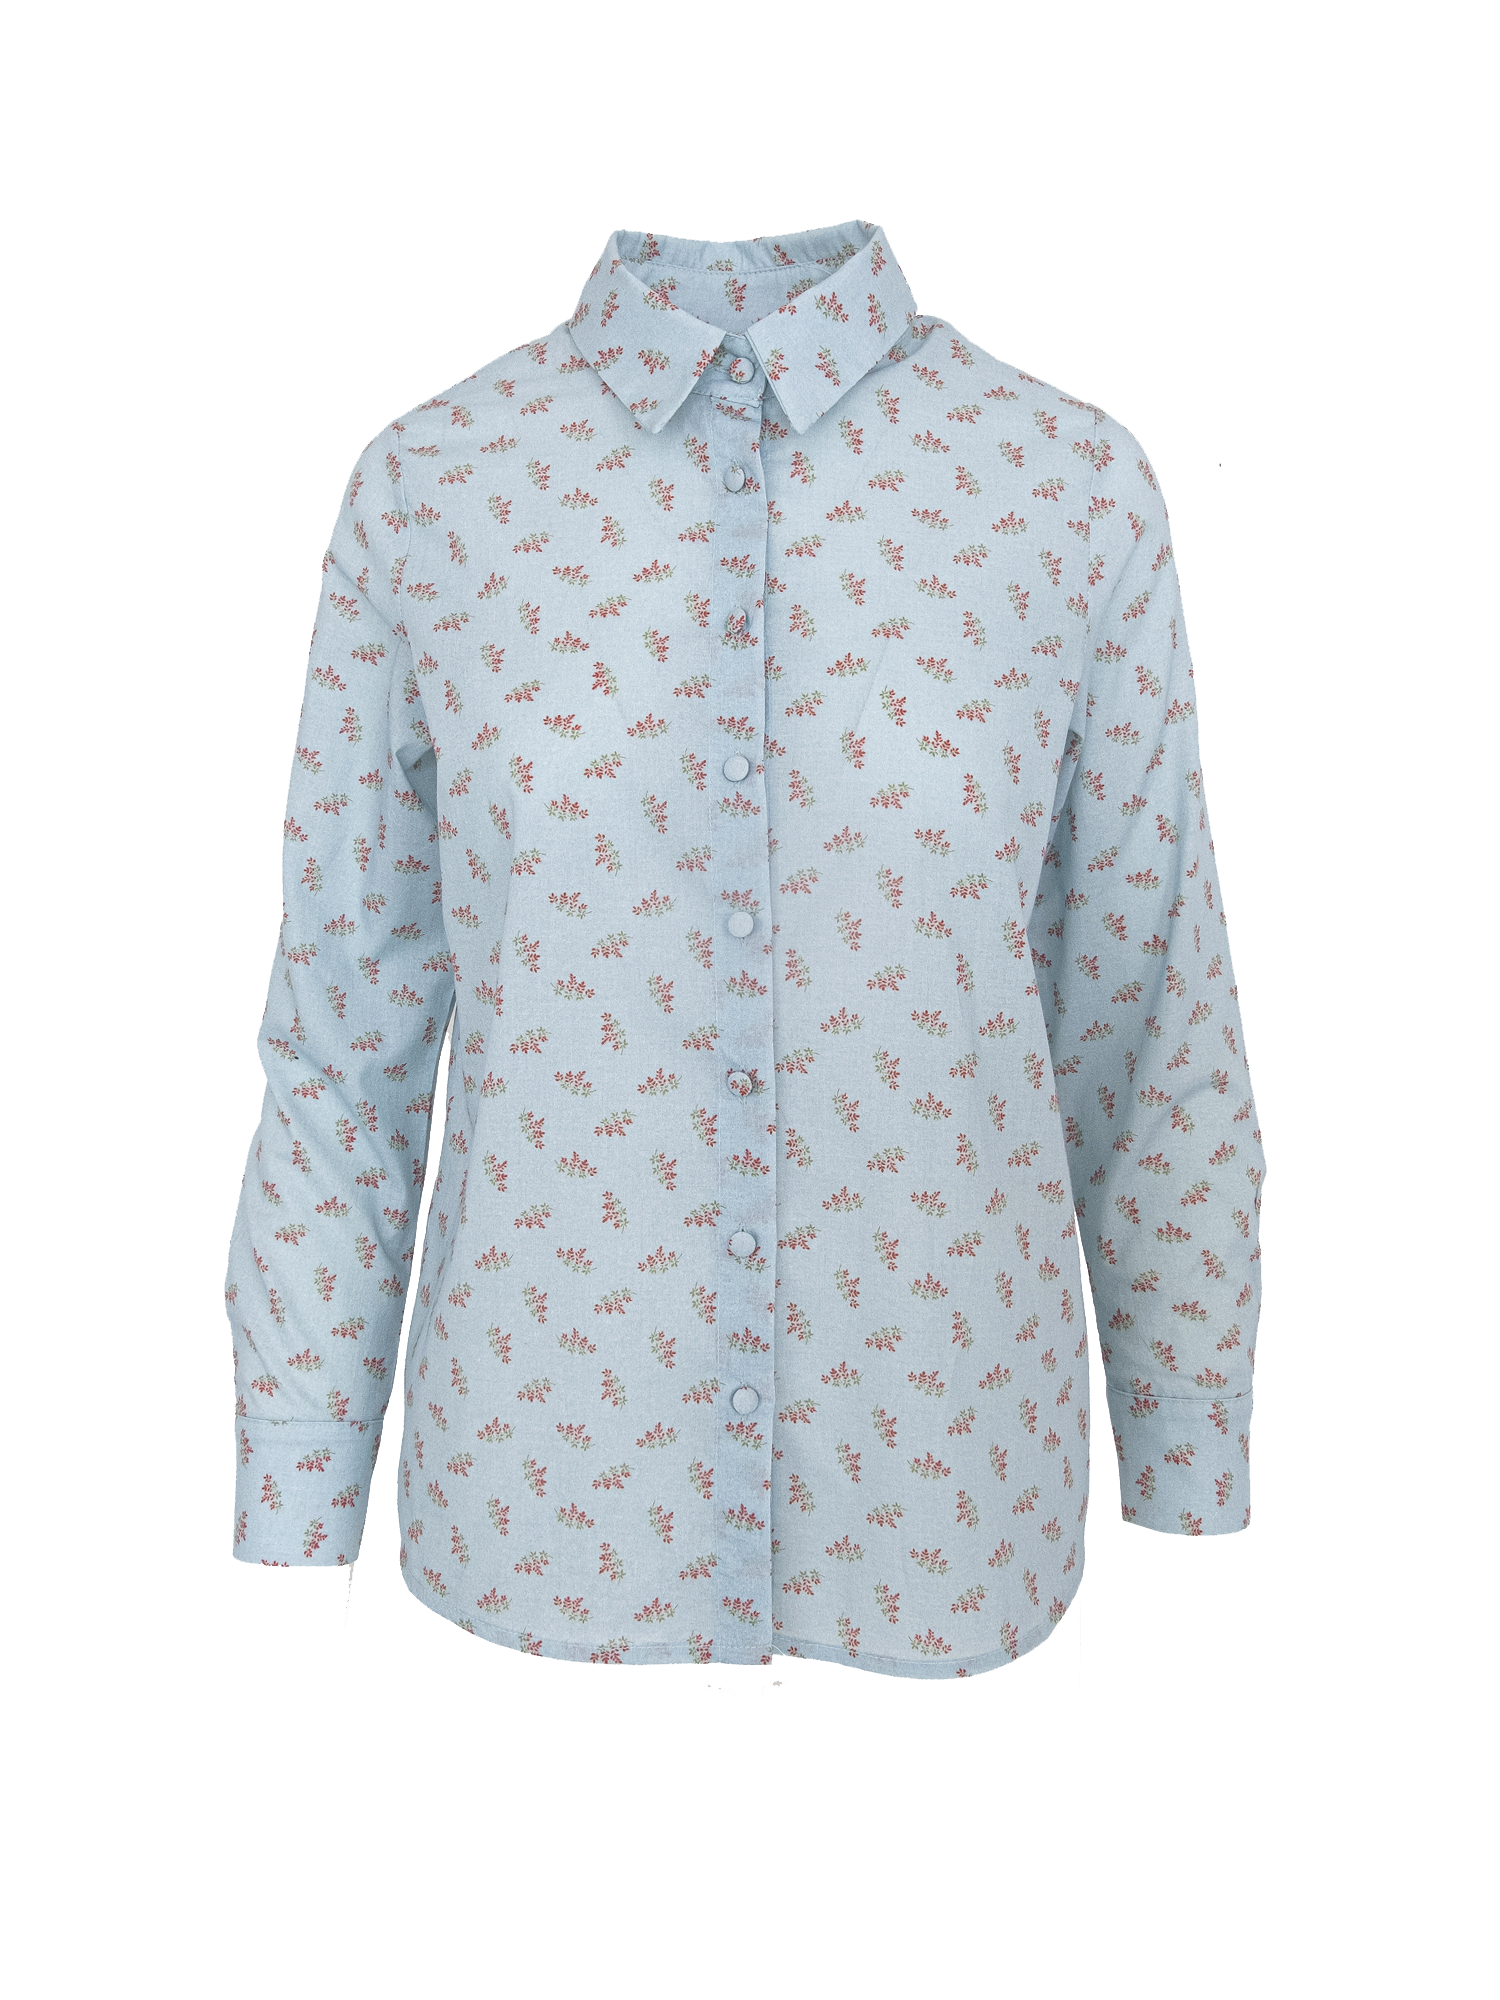 PEONIA - cotton voile Stourhead pattern shirt